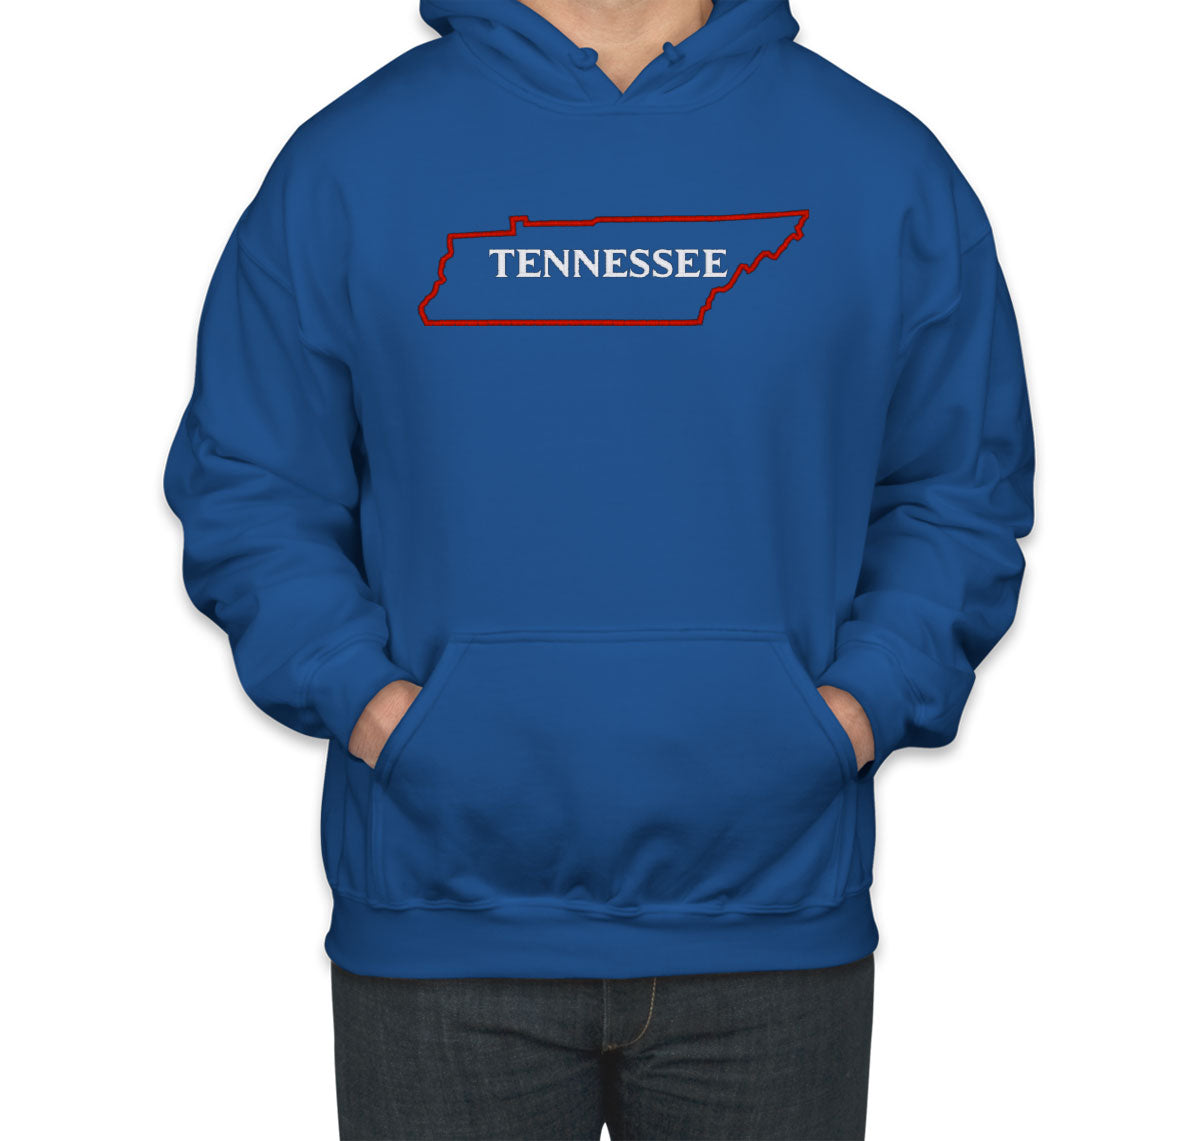 Tennessee Embroidered Unisex Hoodie